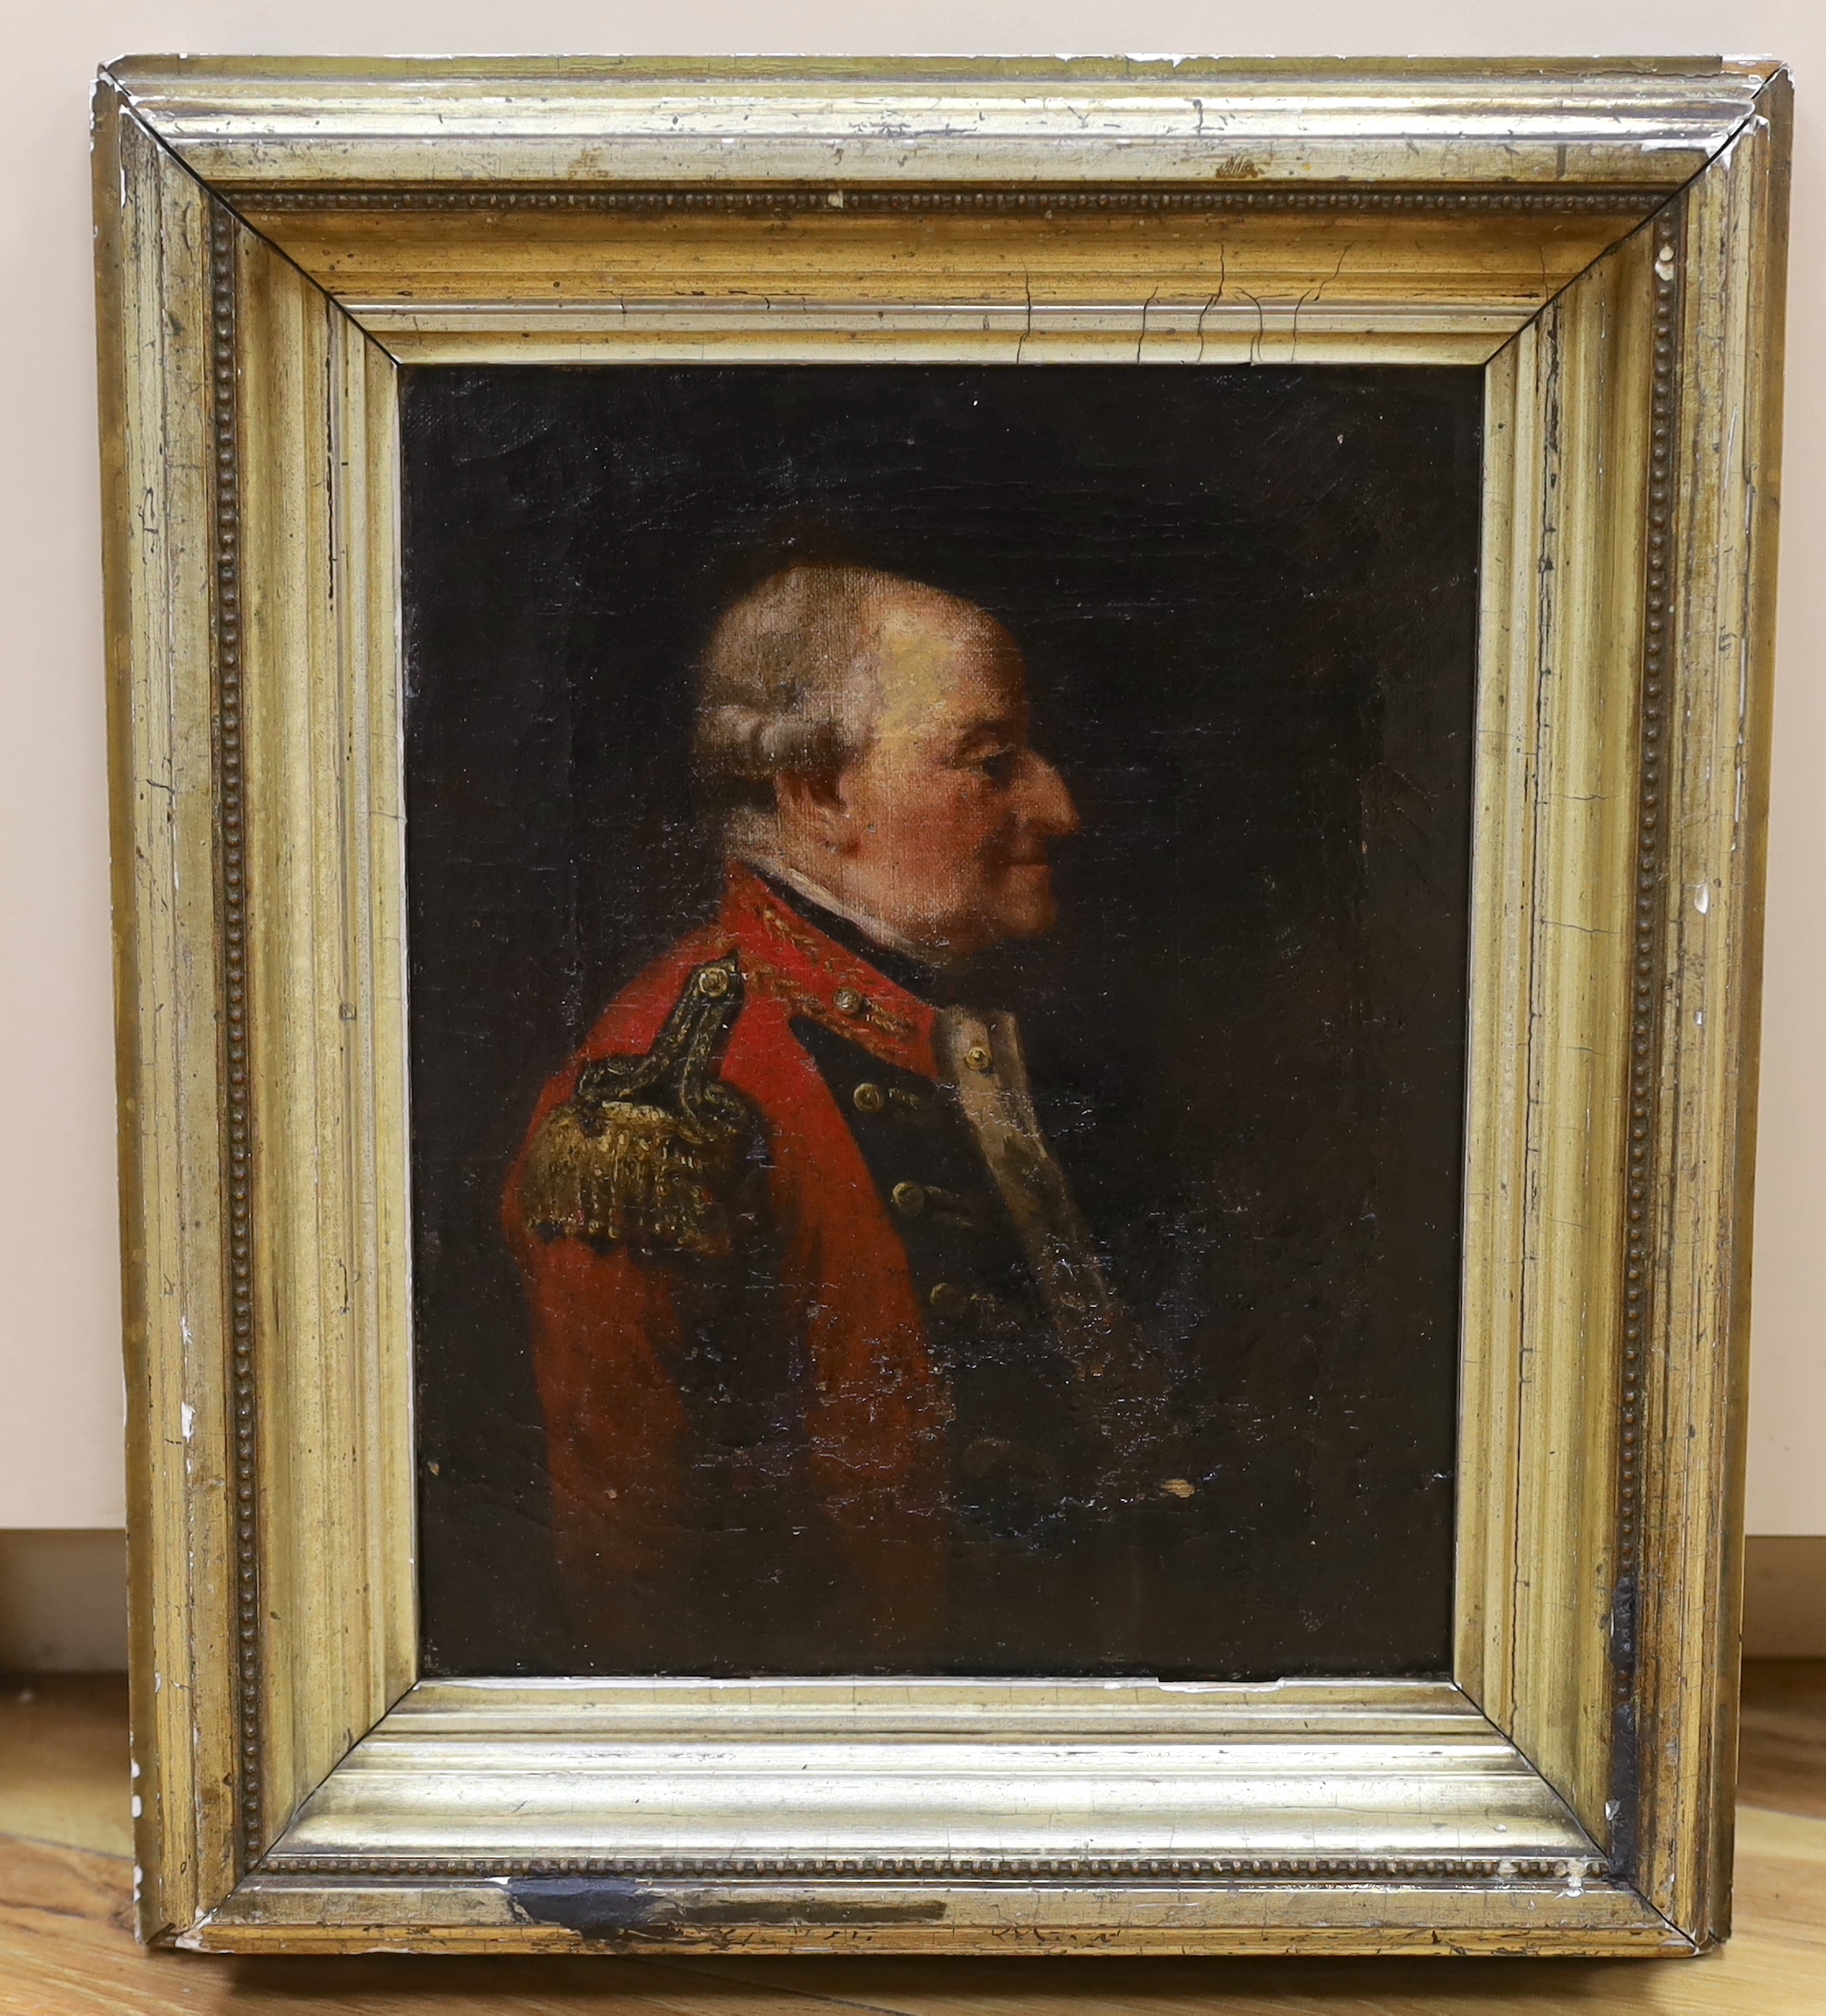 Late 18th/early 19th century British school, oil on canvas, Portrait of George Augustus Eliott, 1st Baron Heathfield wearing military dress, 28cm x 22cm